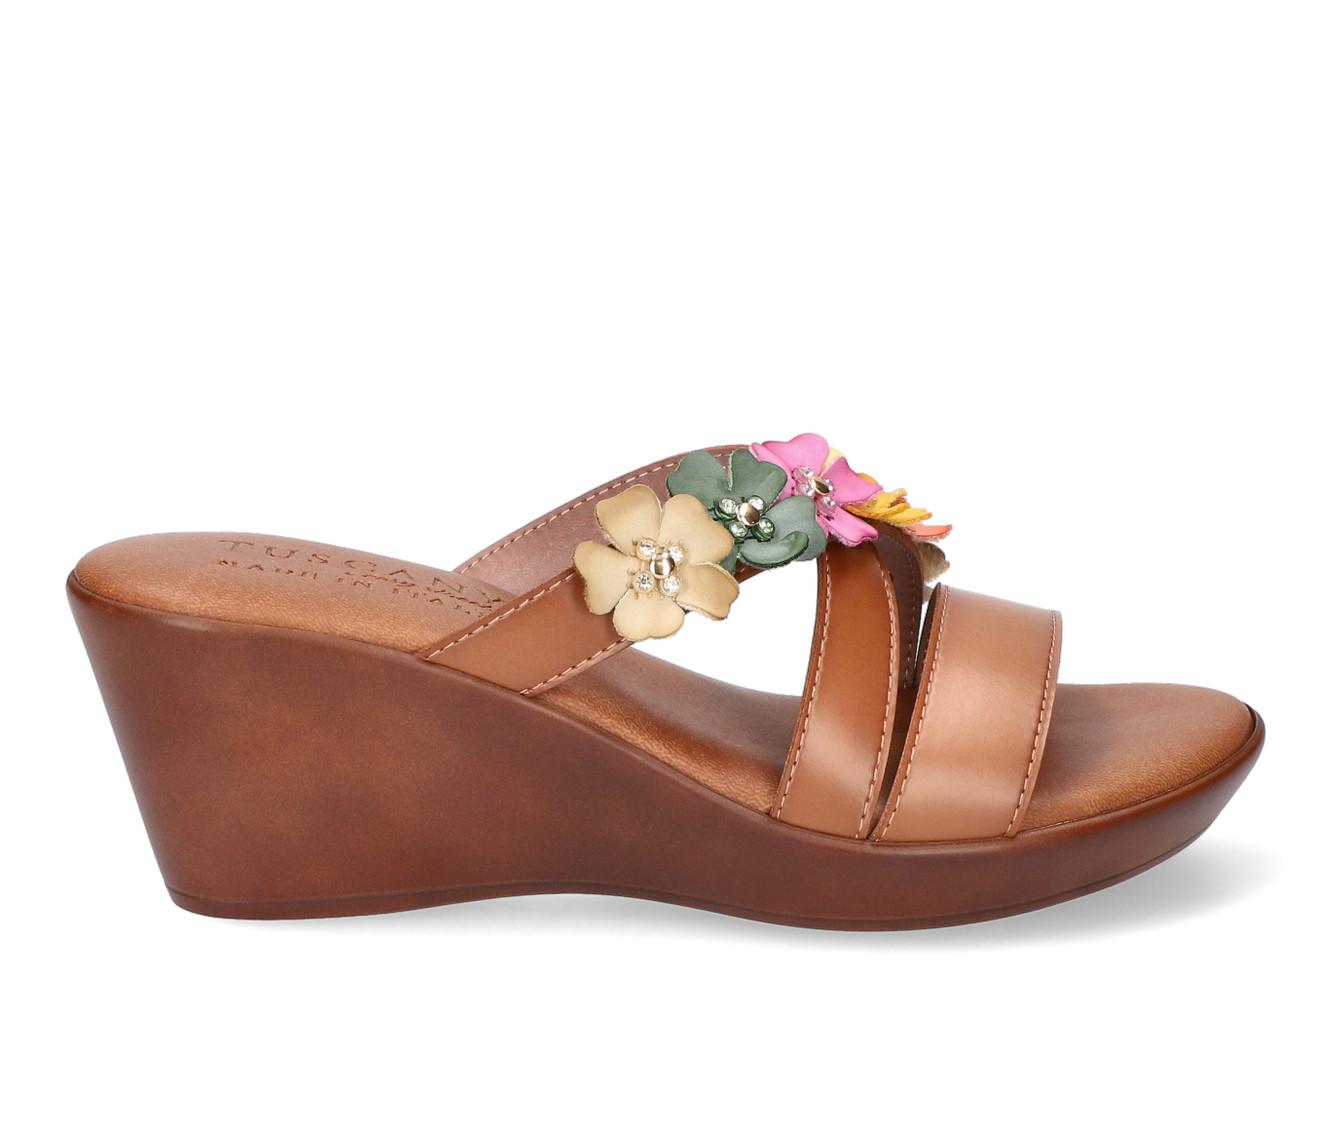 Women's Tuscany by Easy Street Bellefleur Wedge Sandals